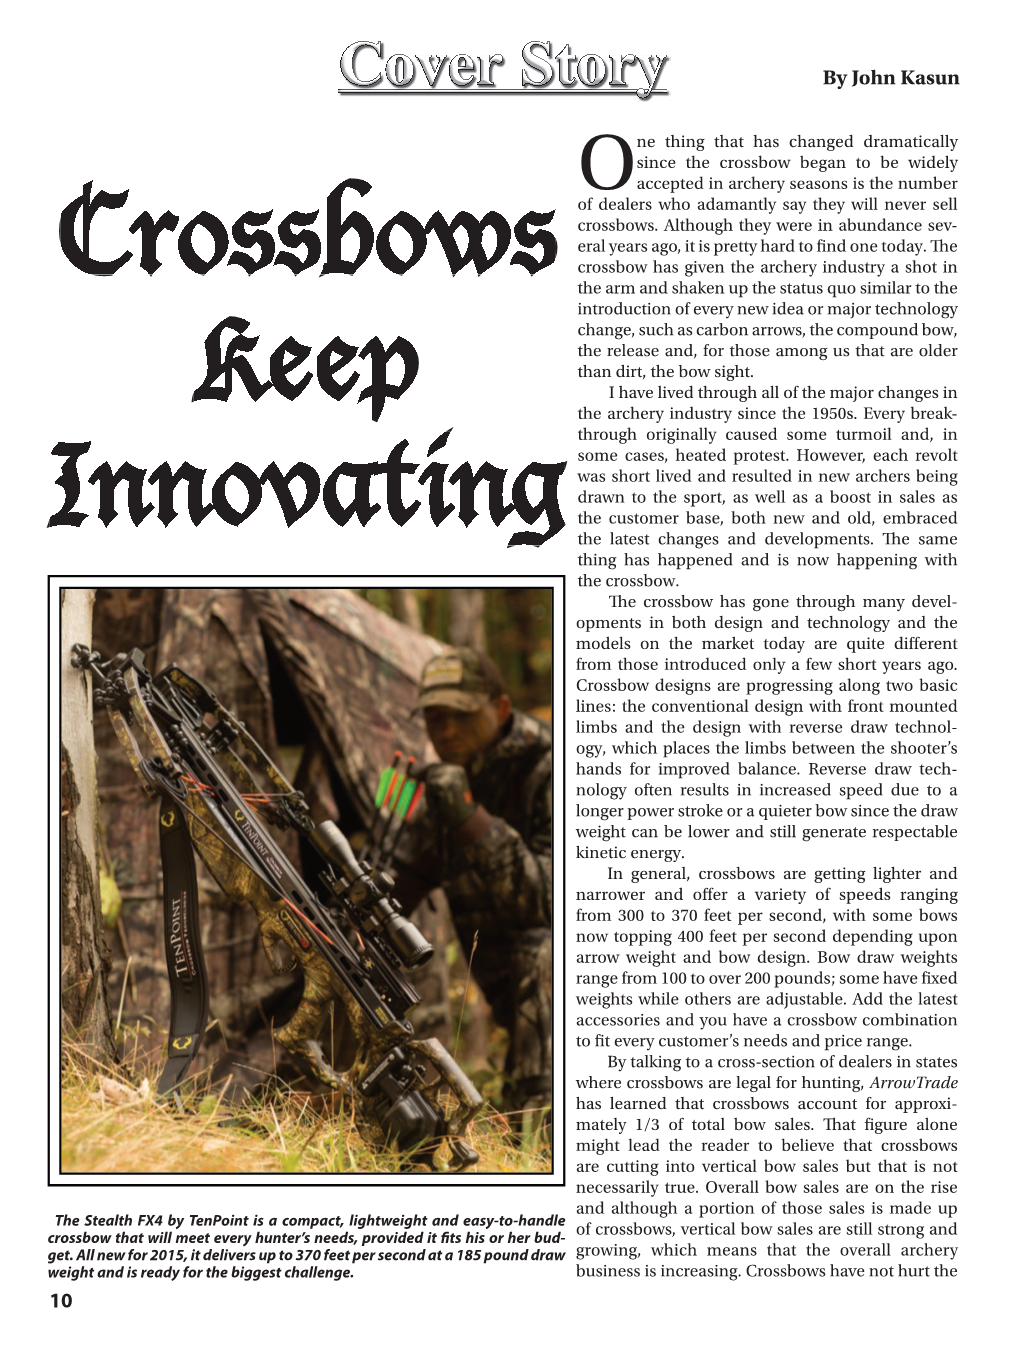 Crossbows Keep Innovating